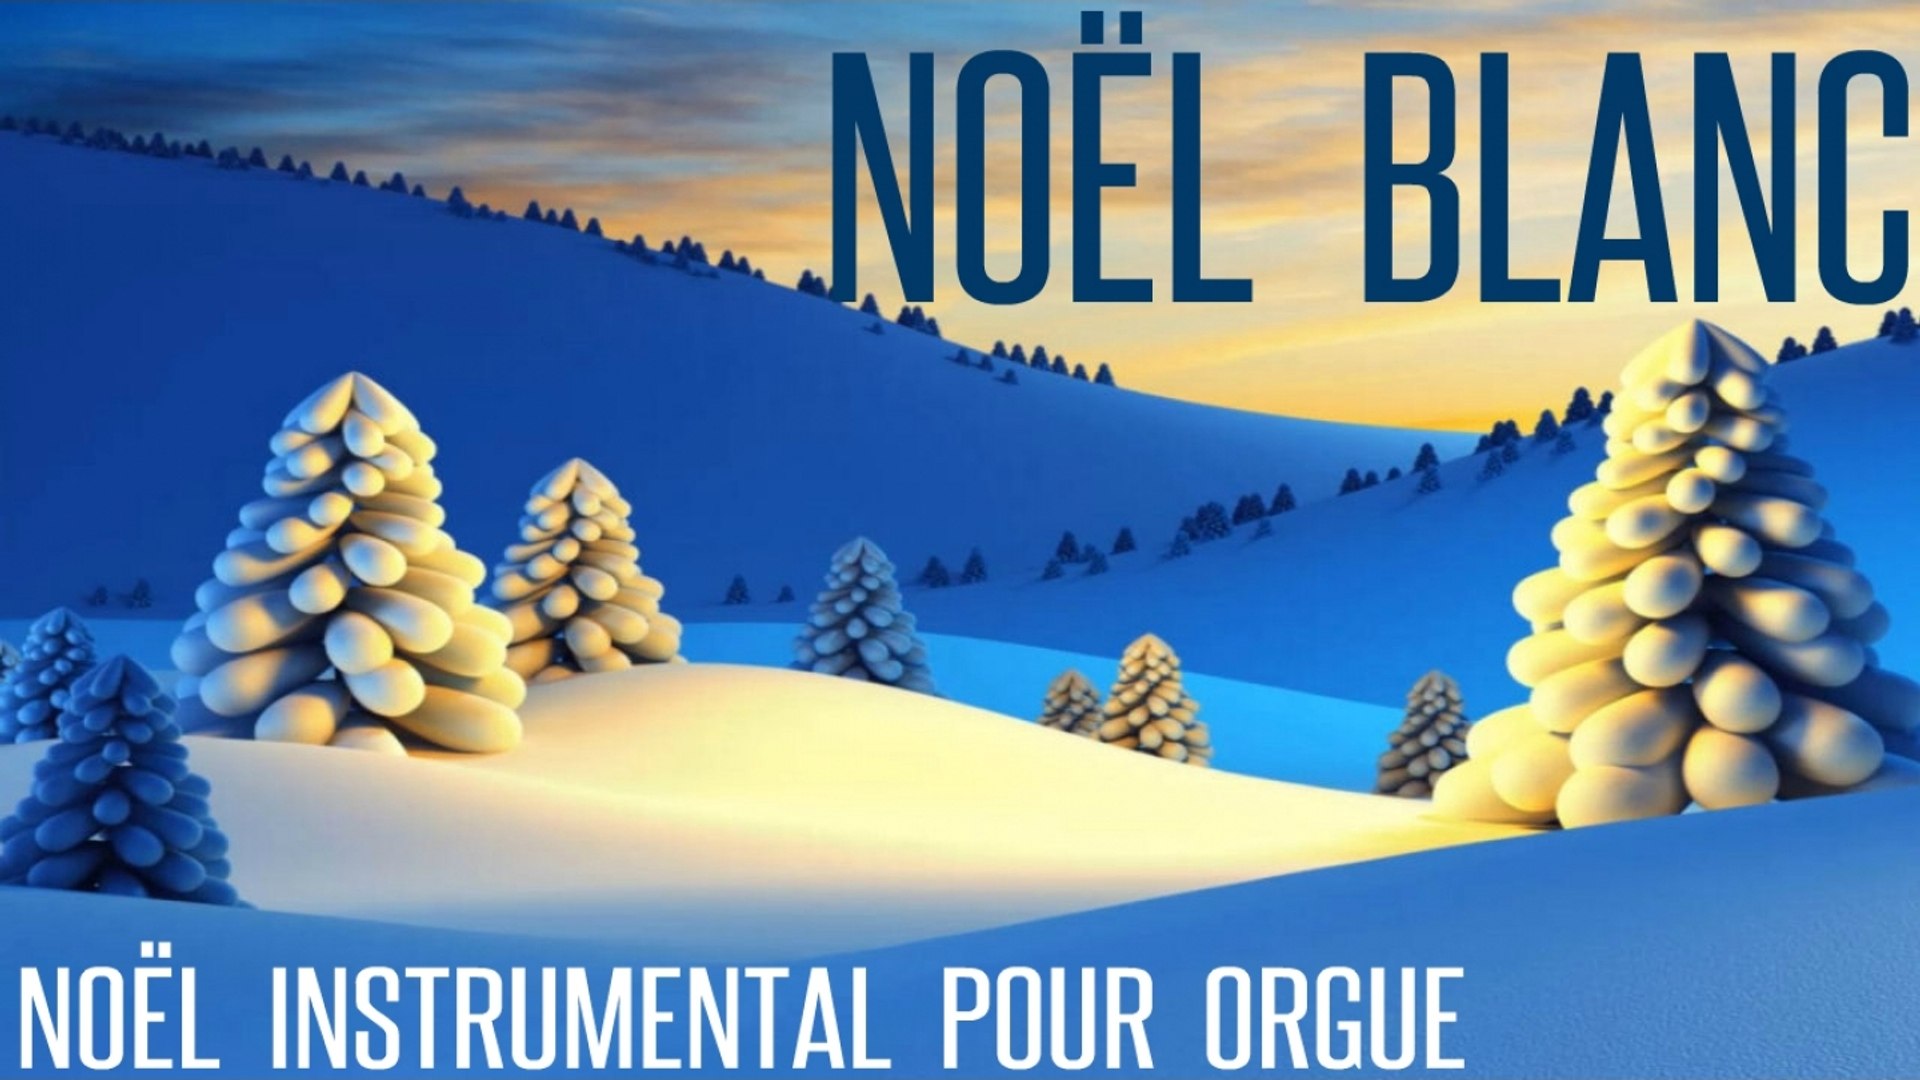 MMF - Noël blanc - Noël instrumental pour orgue